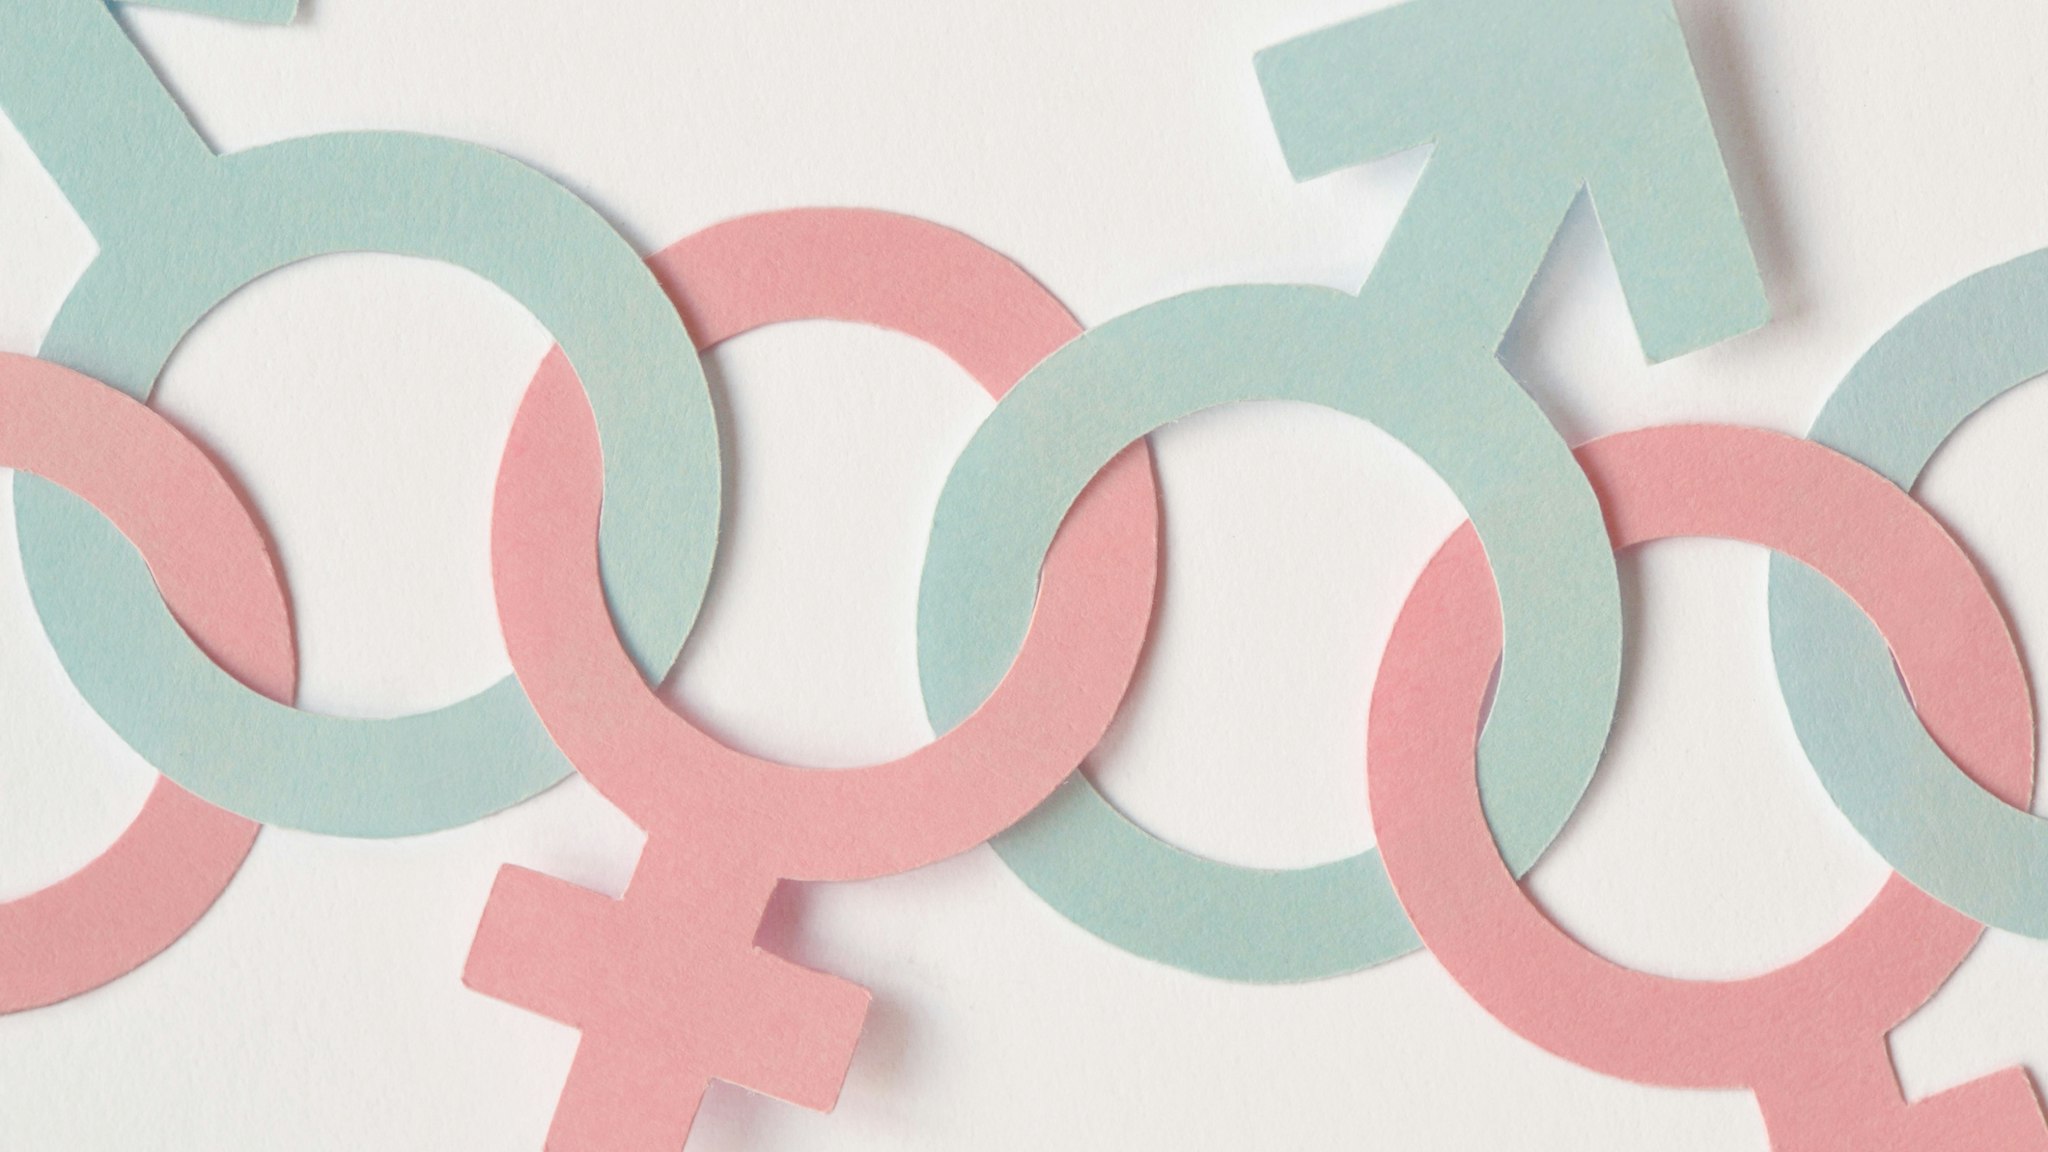 Close-Up Of Gender Symbols On White Background - stock photo